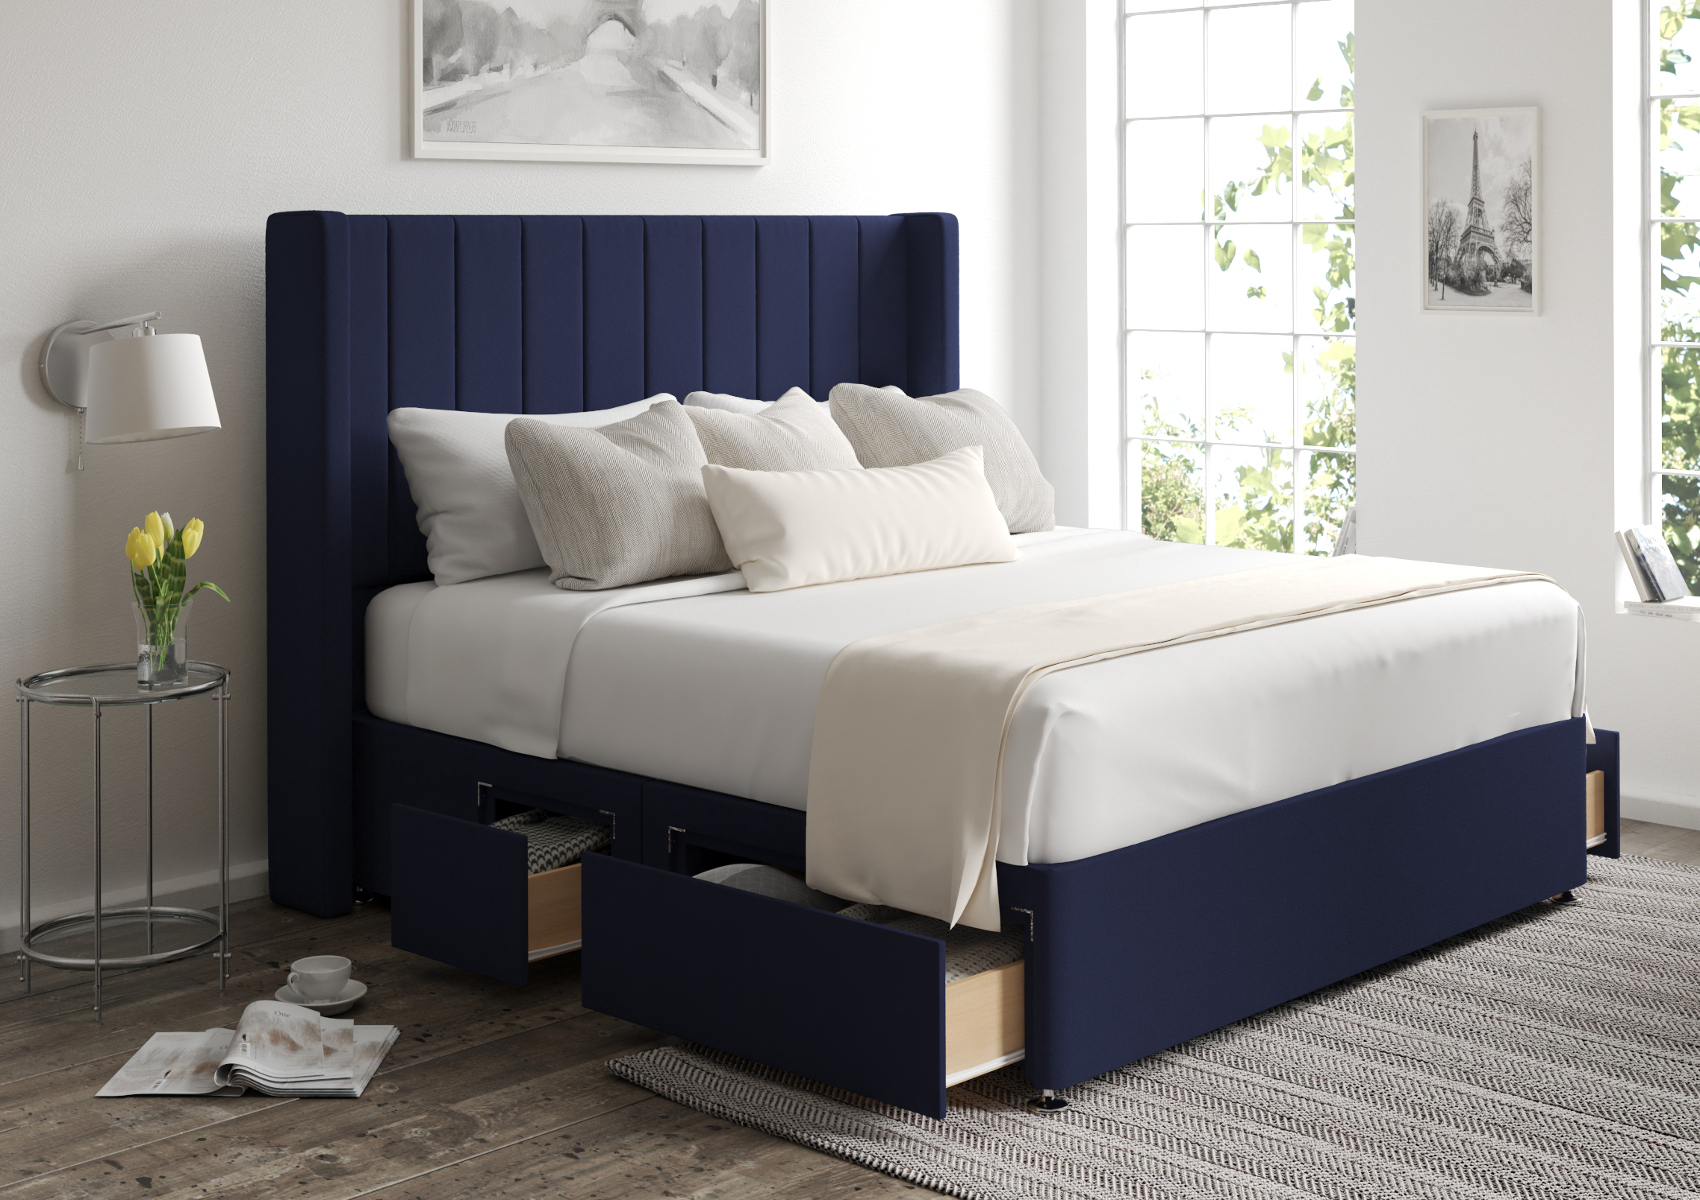 View Aurelia Hugo Royal Upholstered Double Storage Bed Time4Sleep information